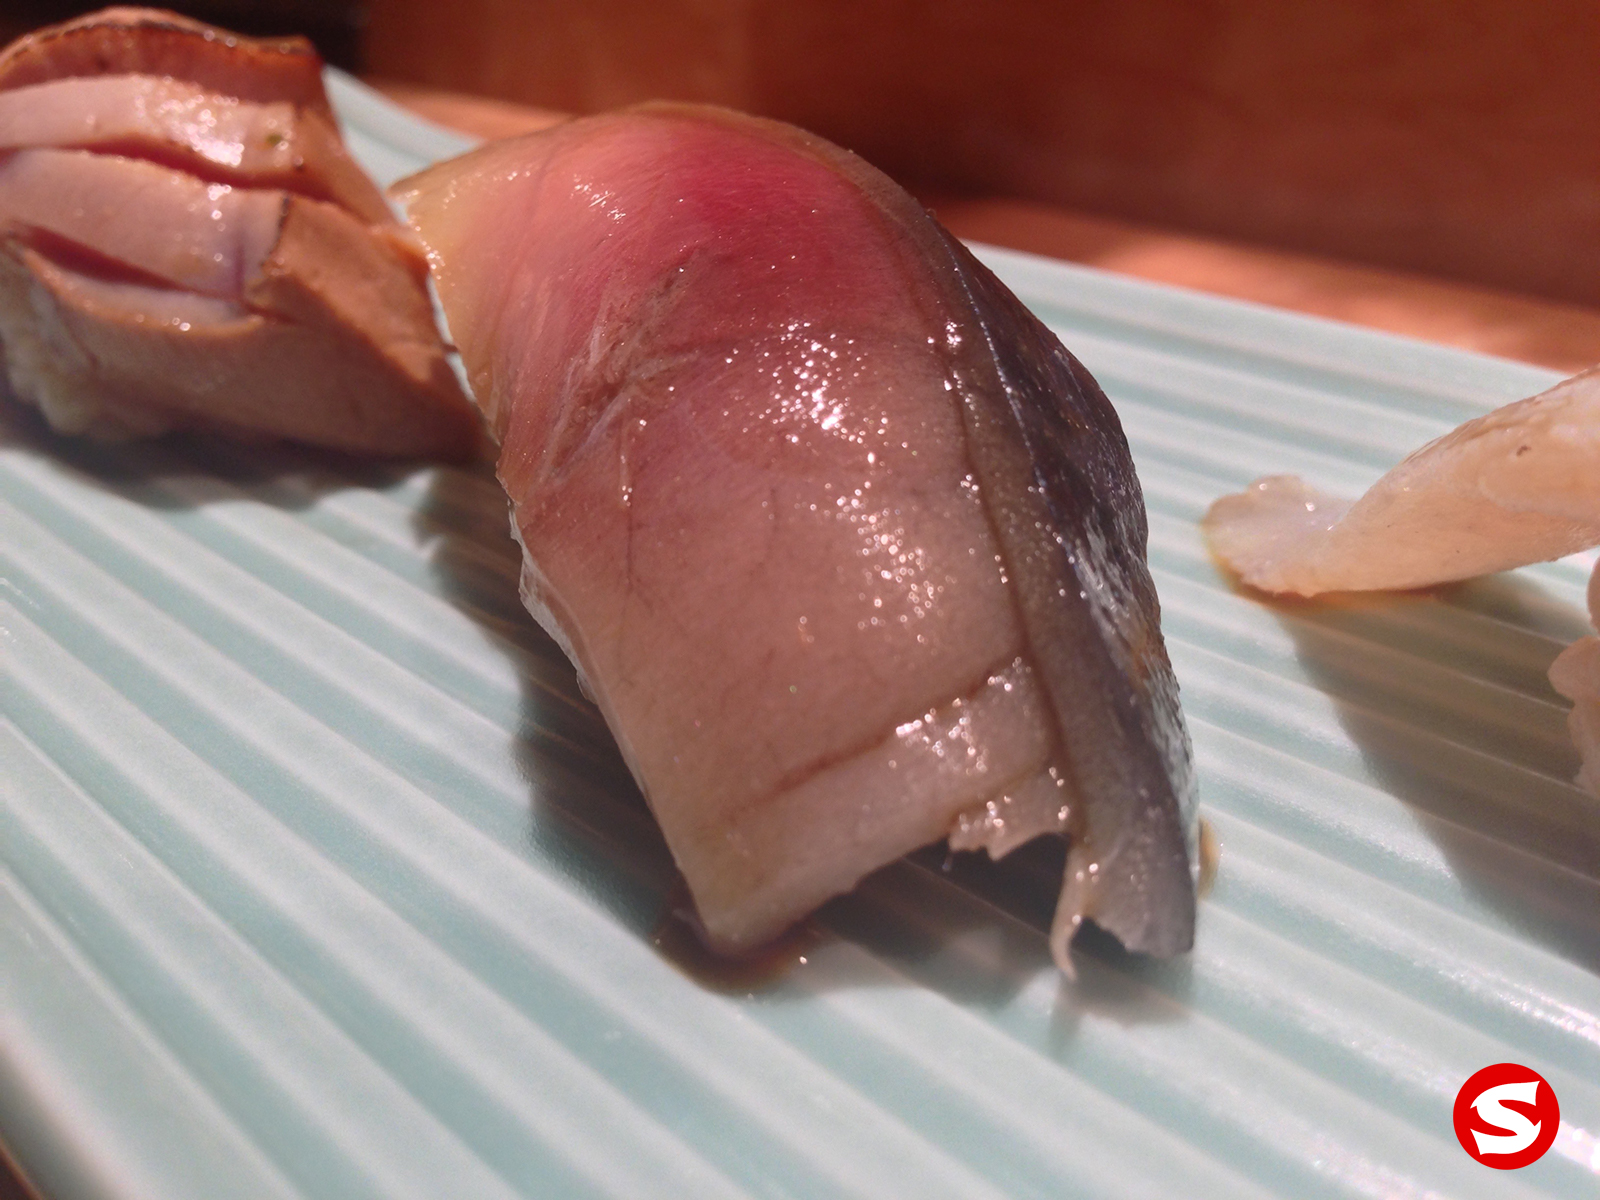 Sawara Cherrywood Smoked Spanish Mackerel Nigiri Sushi Guide